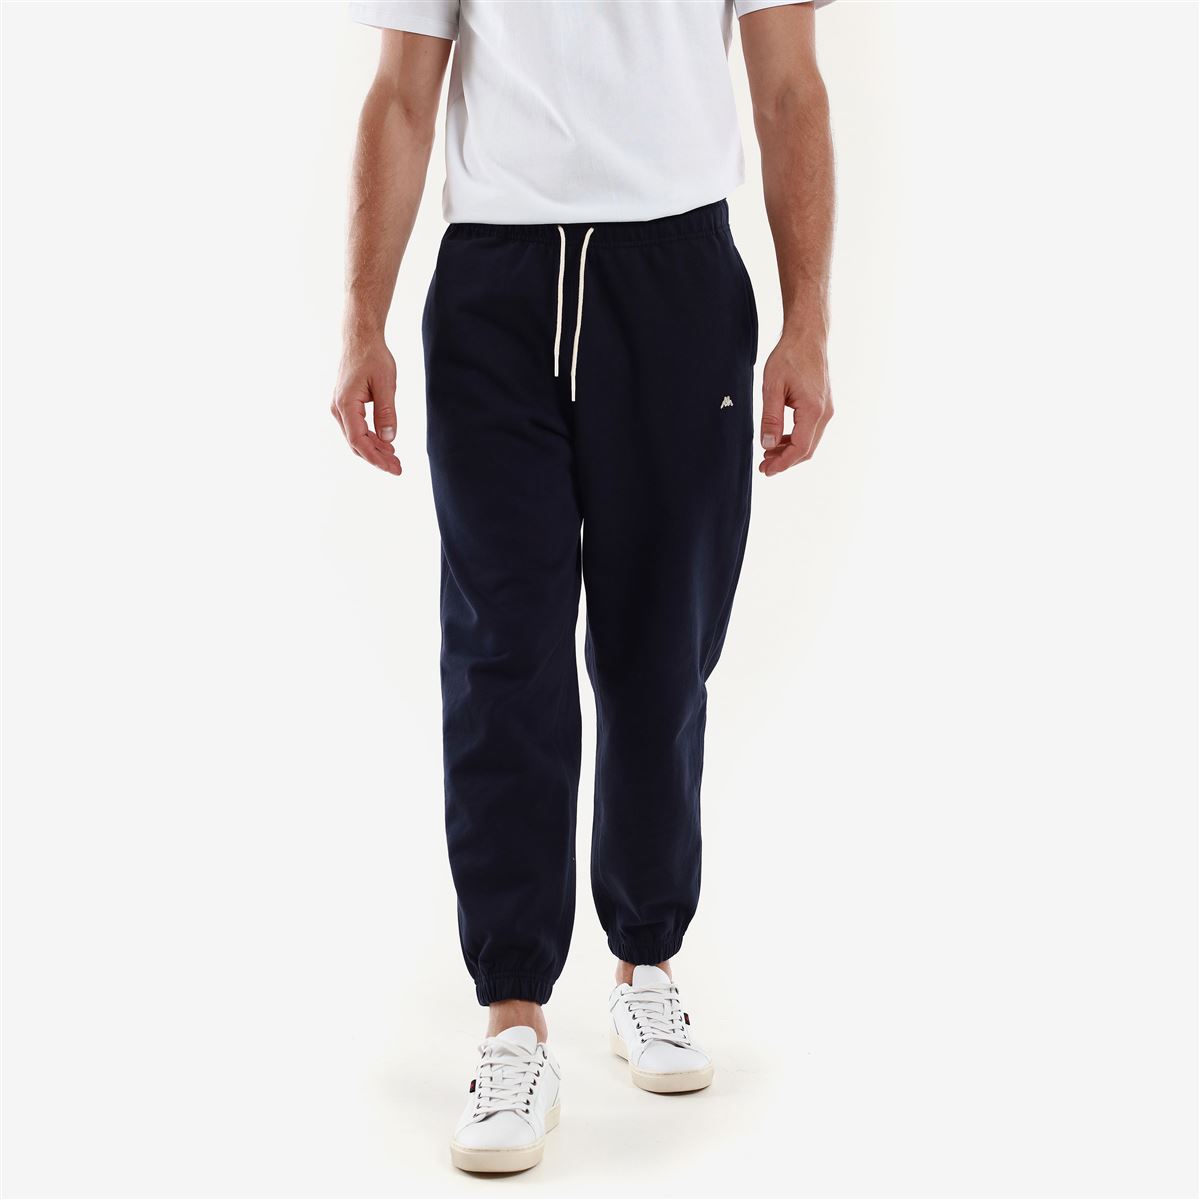 Pantalone Kappa in Tuta / Blu - Ideal Moda